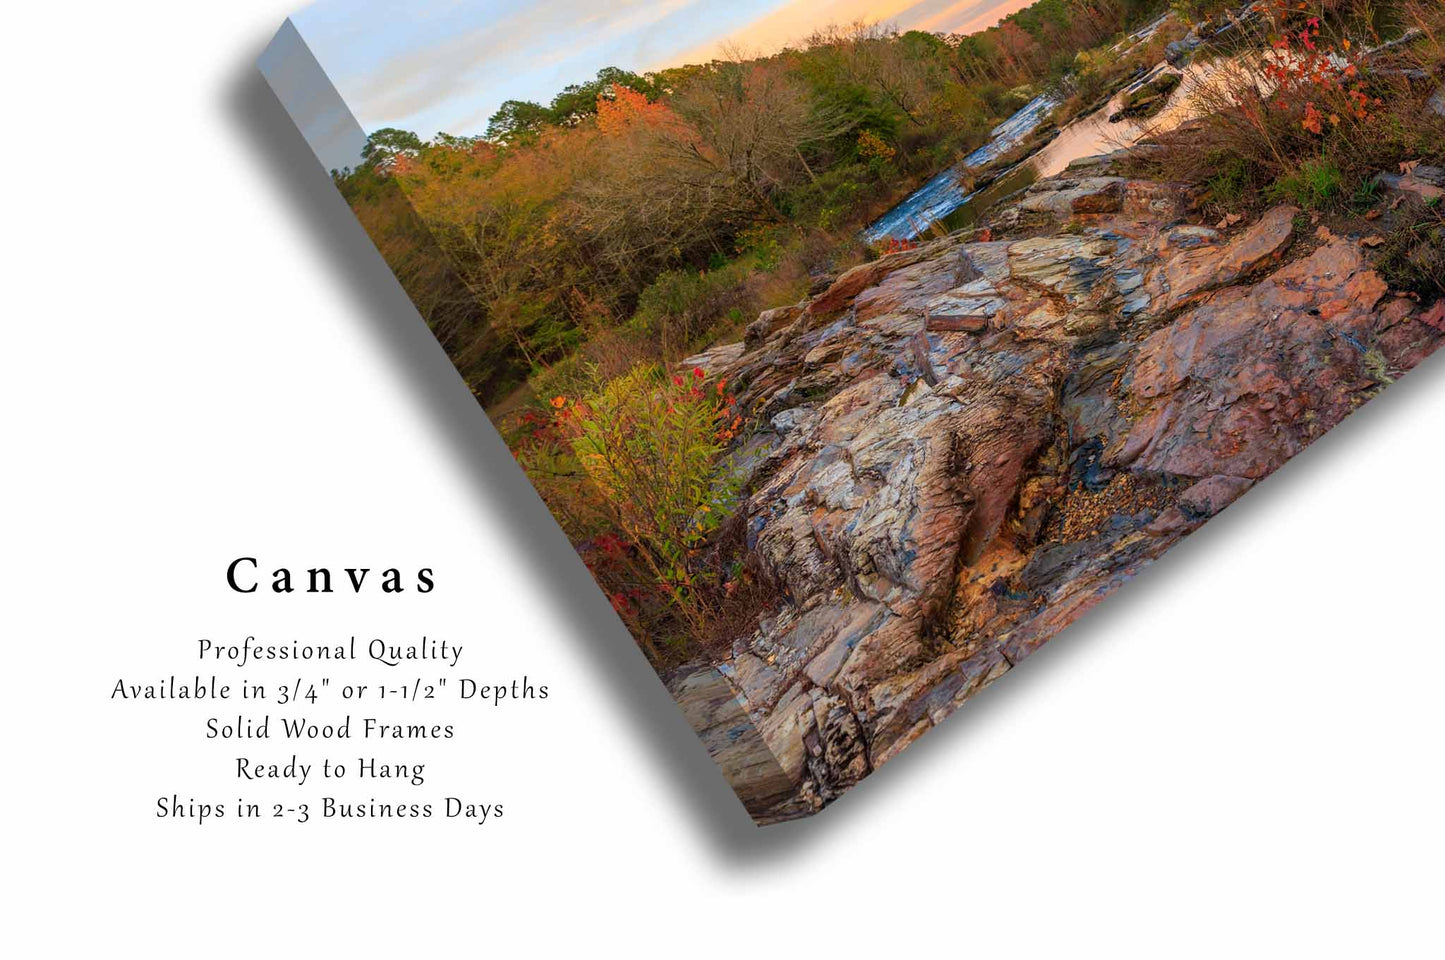 Beavers Bend Canvas Wall Art (Ready to Hang) Gallery Wrap of Fall Color Surrounding Creek near Broken Bow Lake Oklahoma Landscape Photography Nature Decor